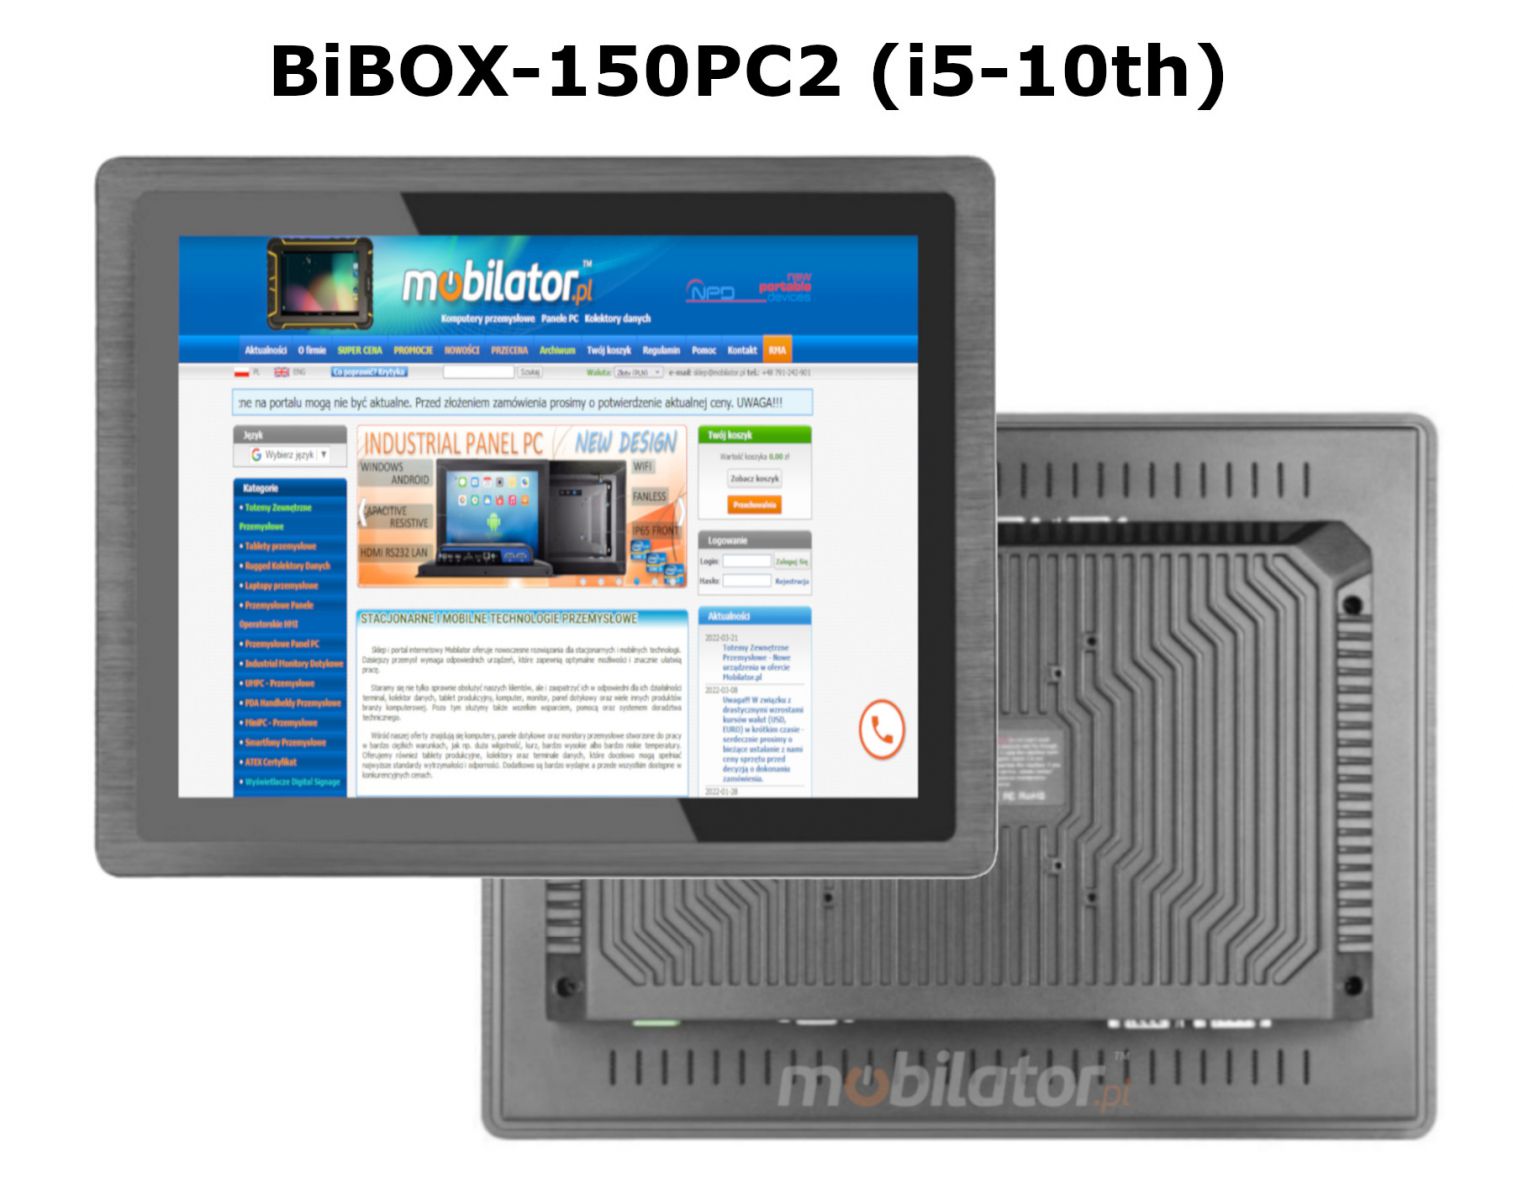 BIBOX-150PC2 spacious, fast and efficient PC panel